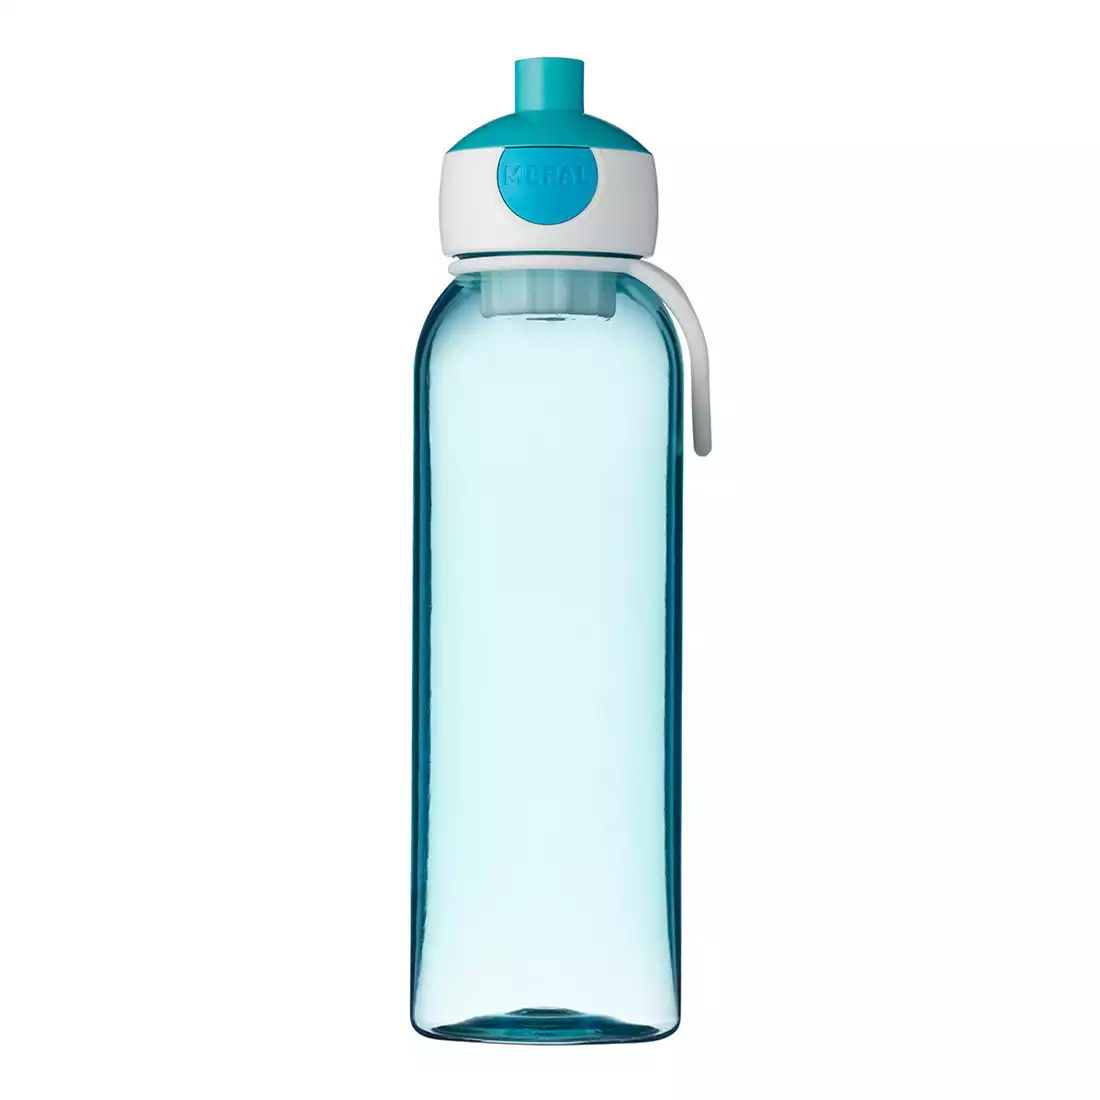 MEPAL CAMPUS butelka na wodę 500ml, turkusowa